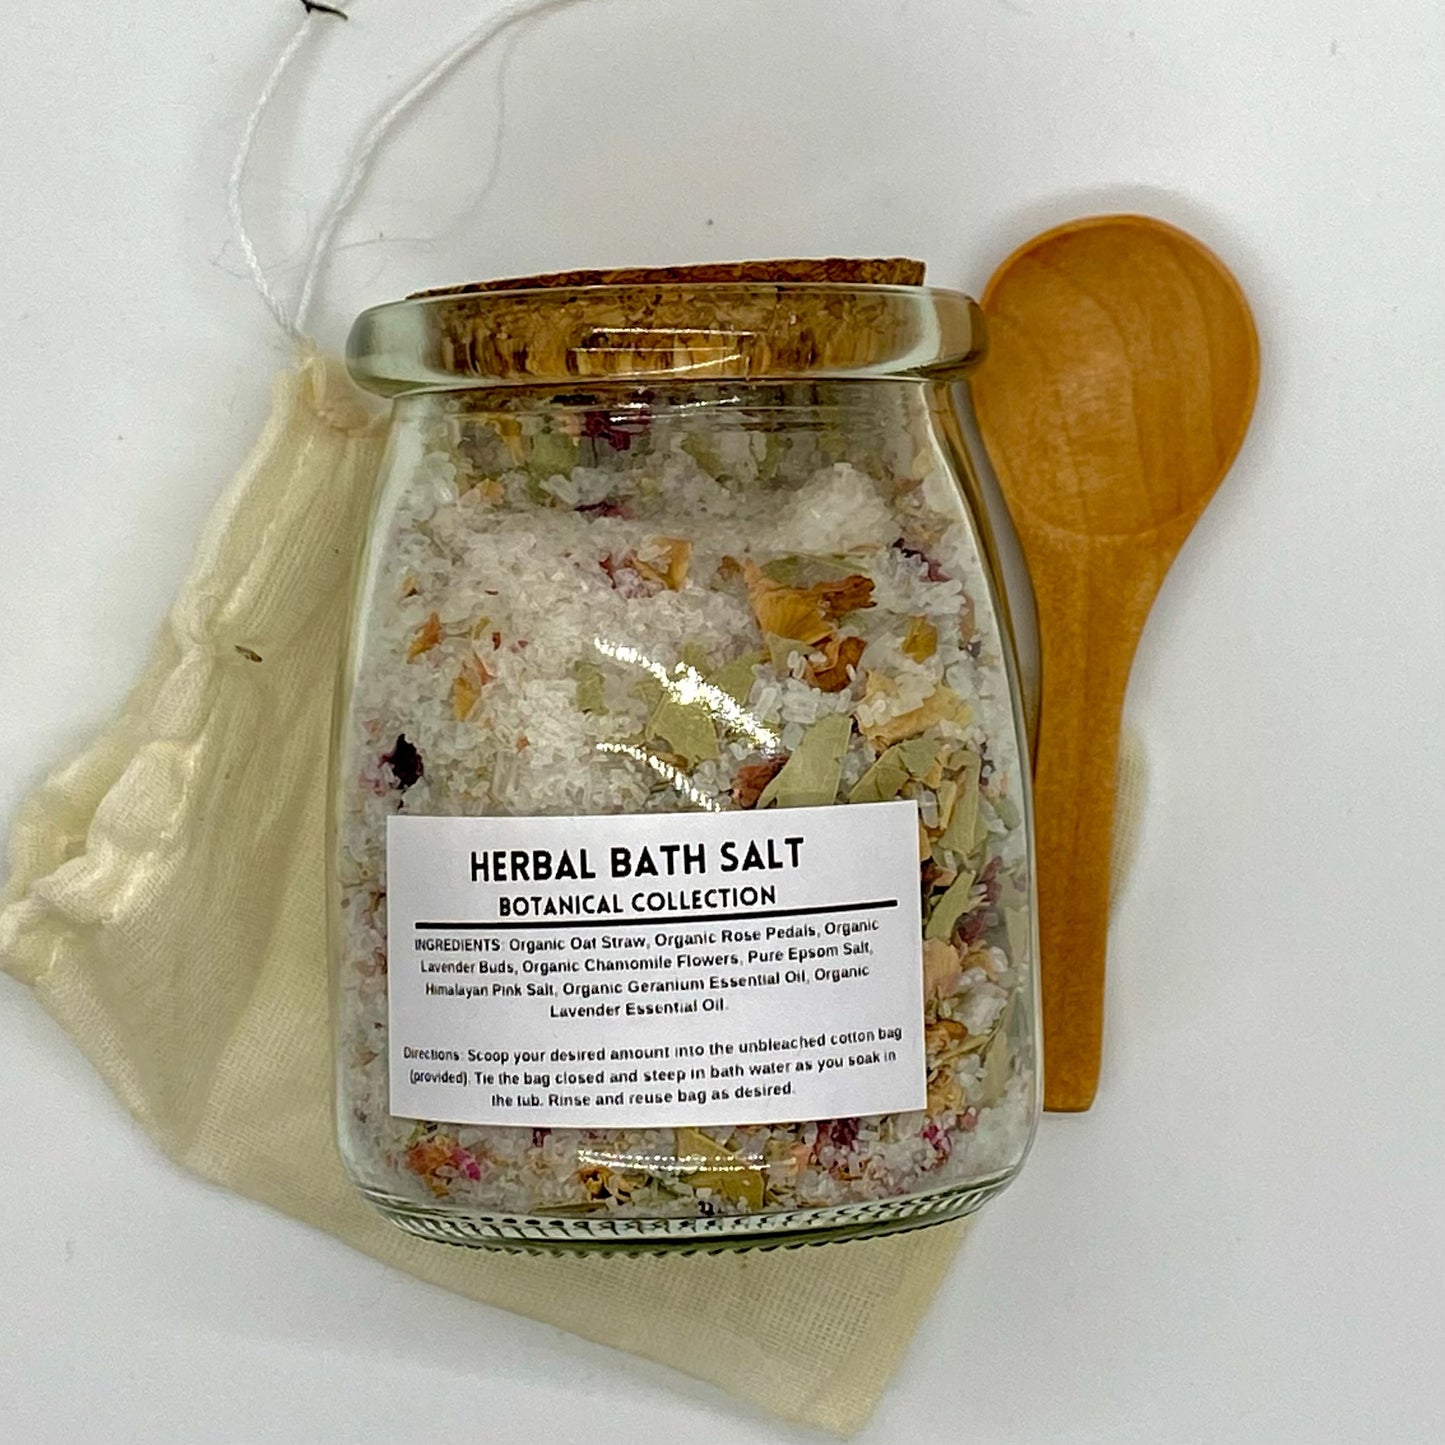 Herbal Bath Salts